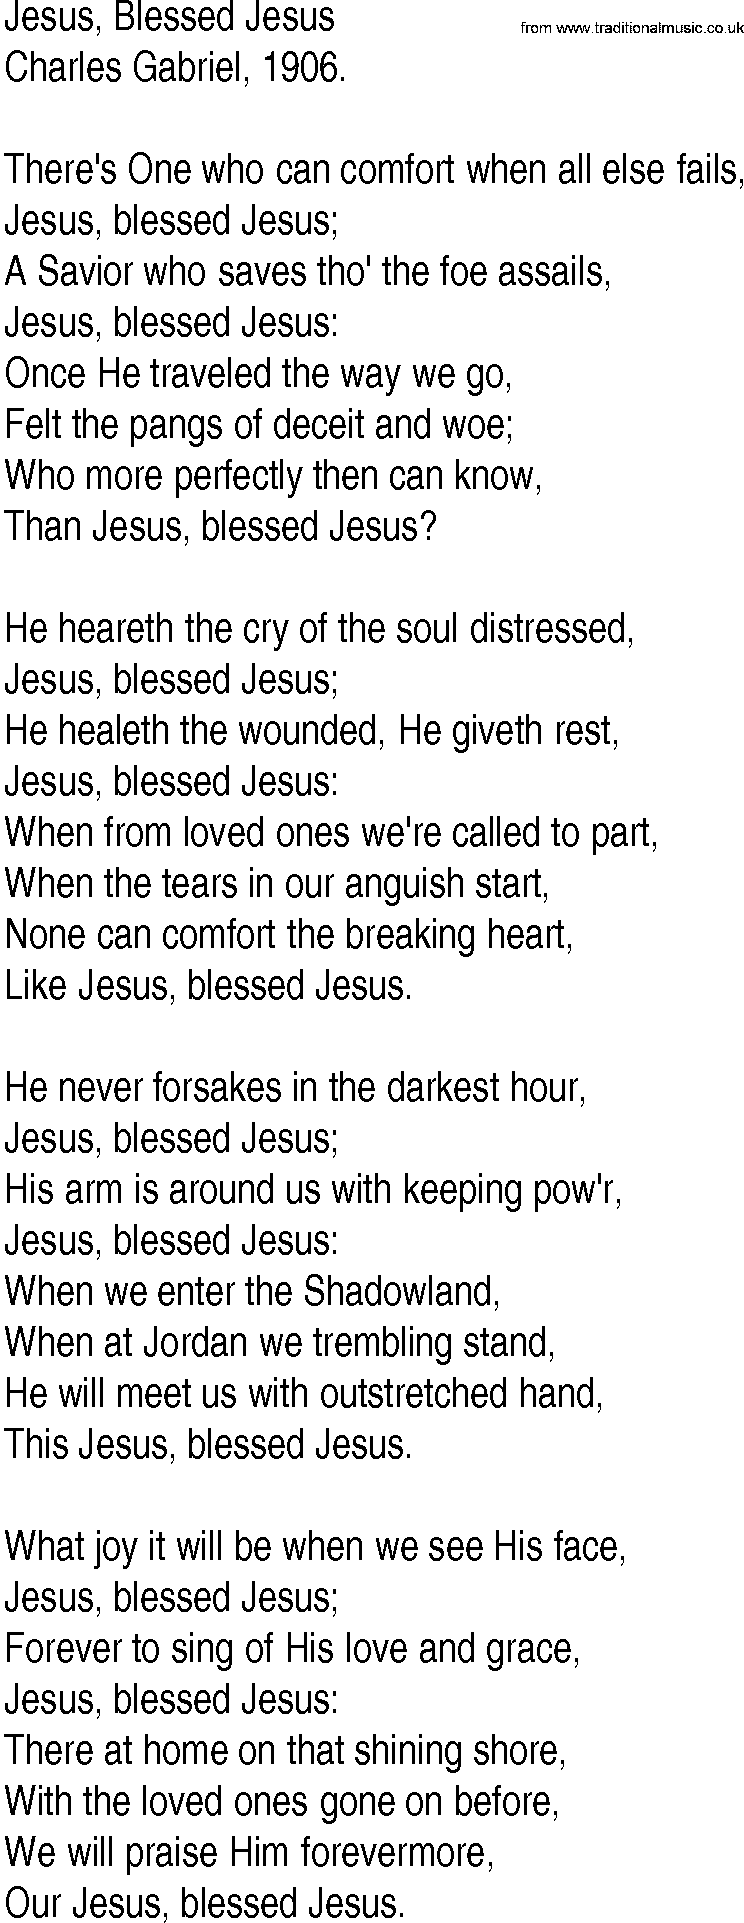 Hymn and Gospel Song: Jesus, Blessed Jesus by Charles Gabriel lyrics